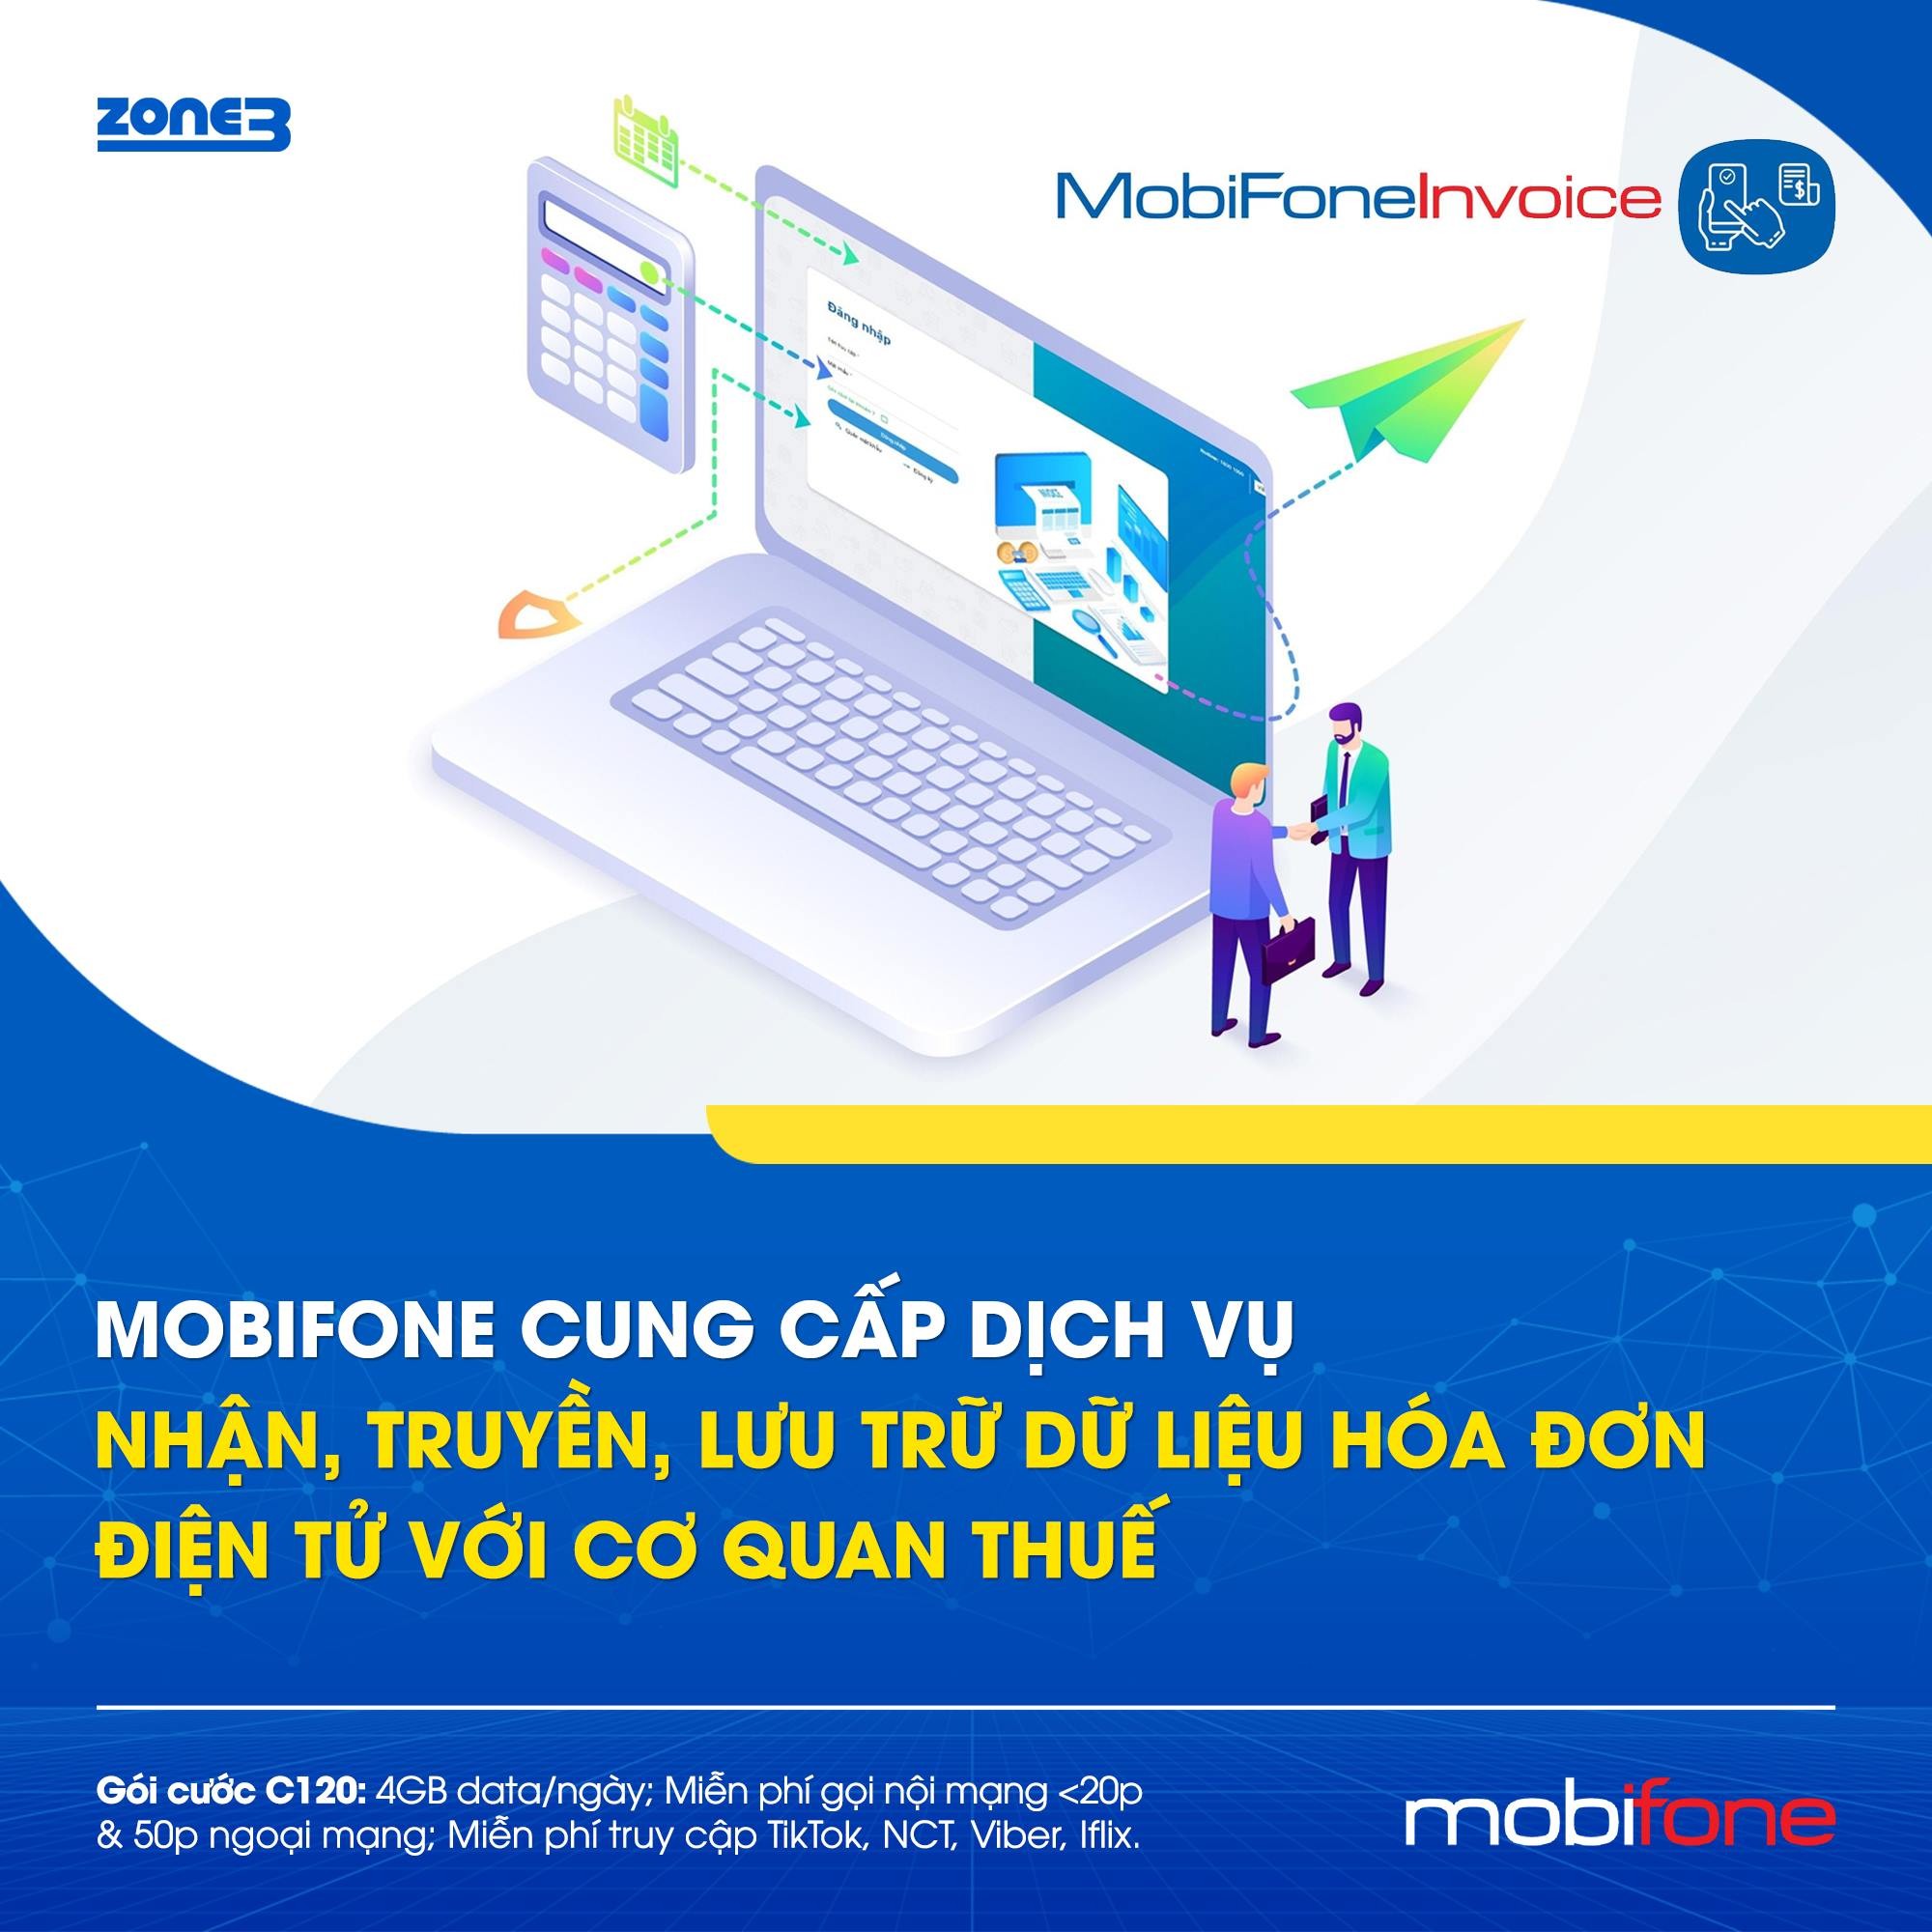 mobifone-invoice-1654603404.jpg